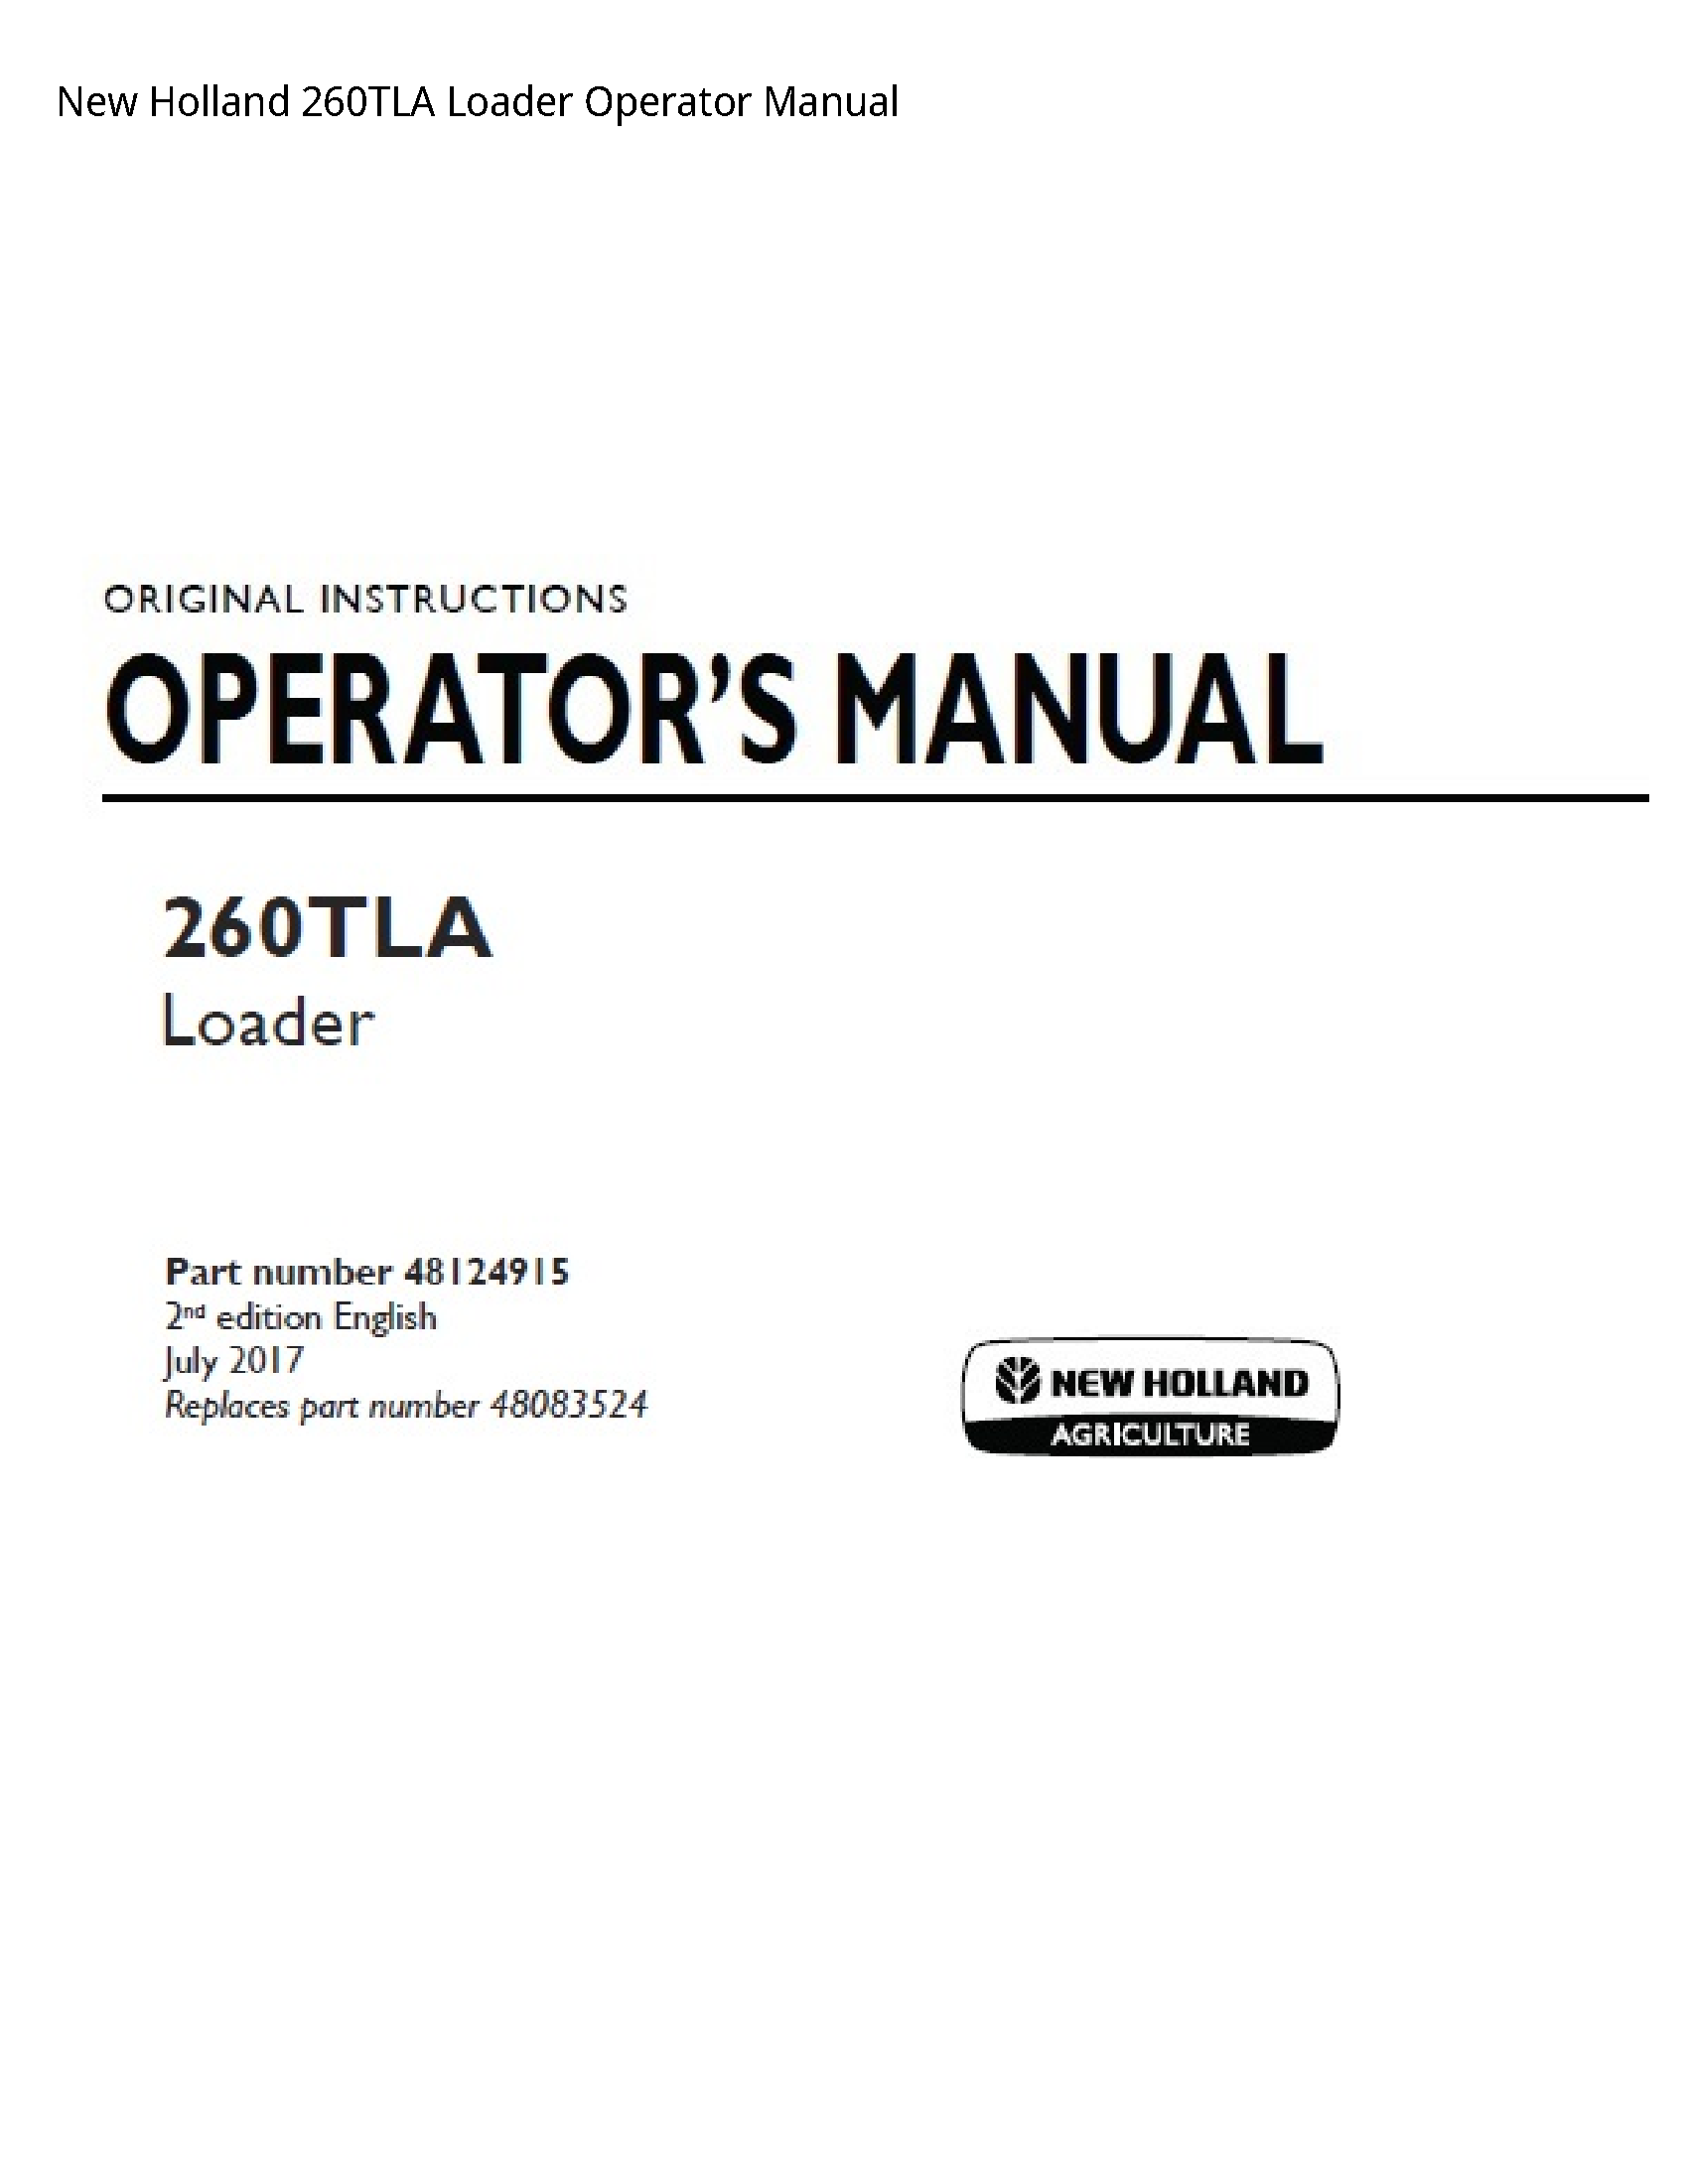 New Holland 260TLA Loader Operator manual